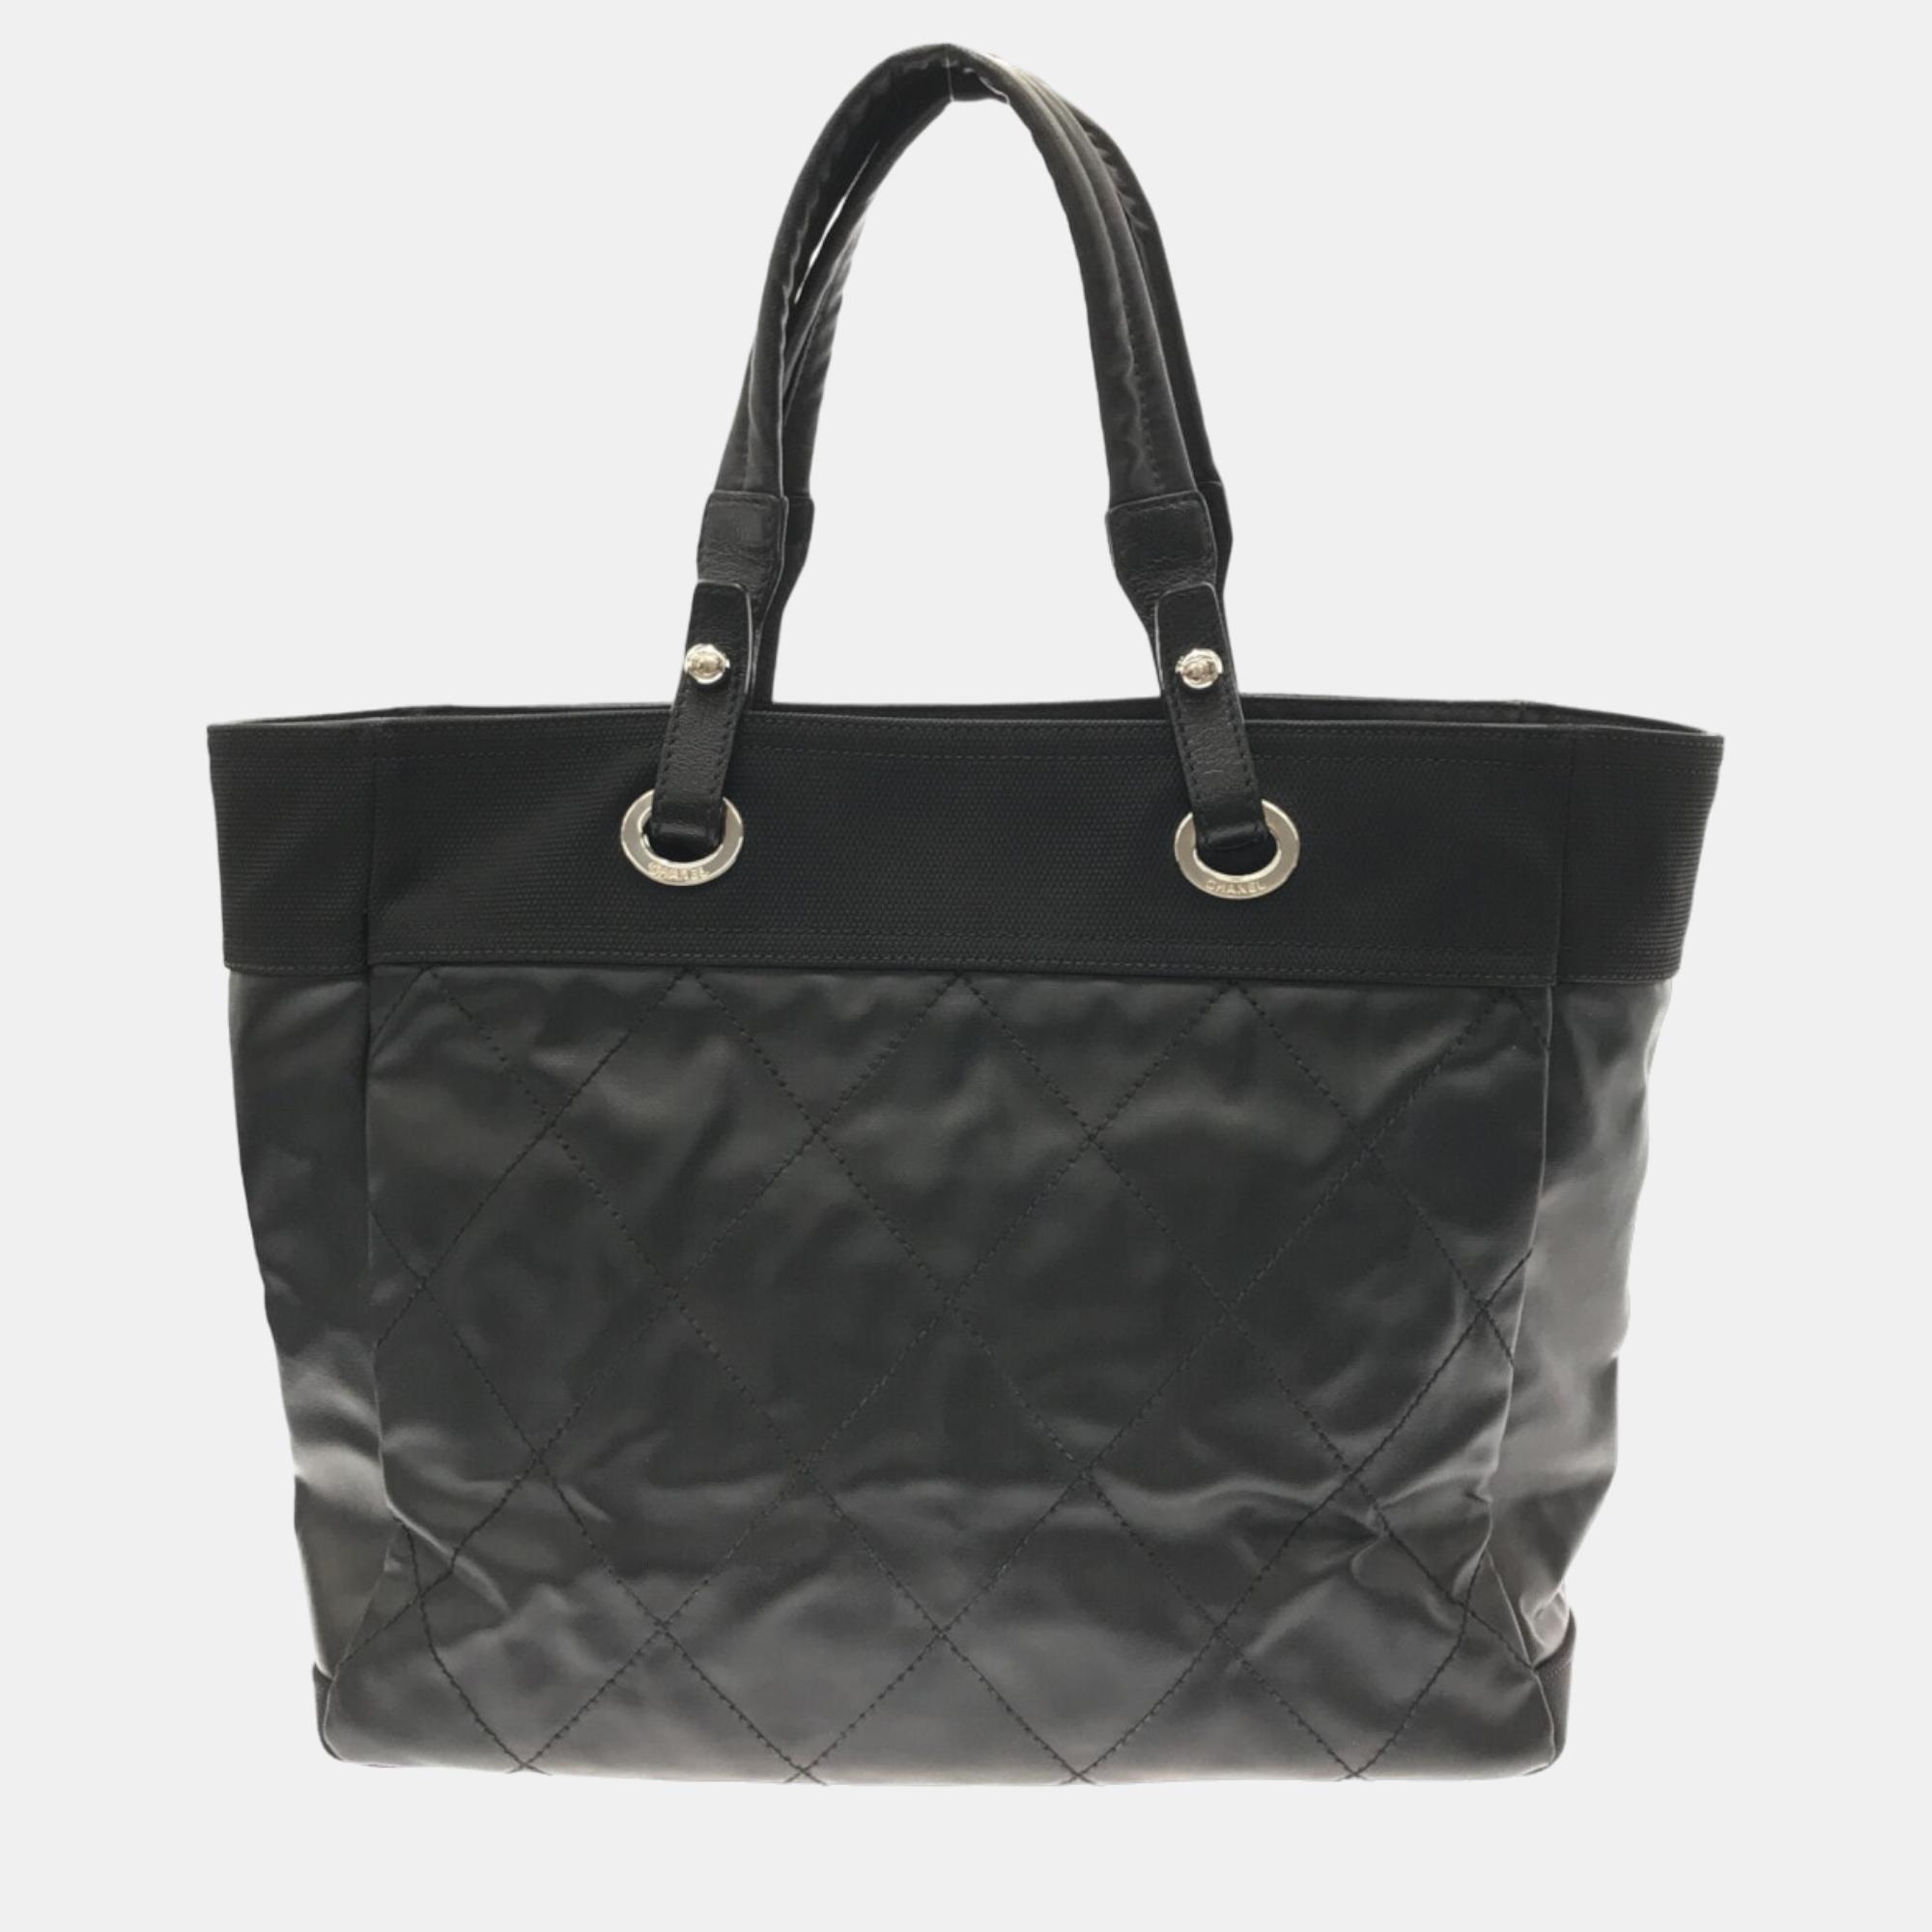 Chanel Black Leather Paris Biarritz Tote Bag